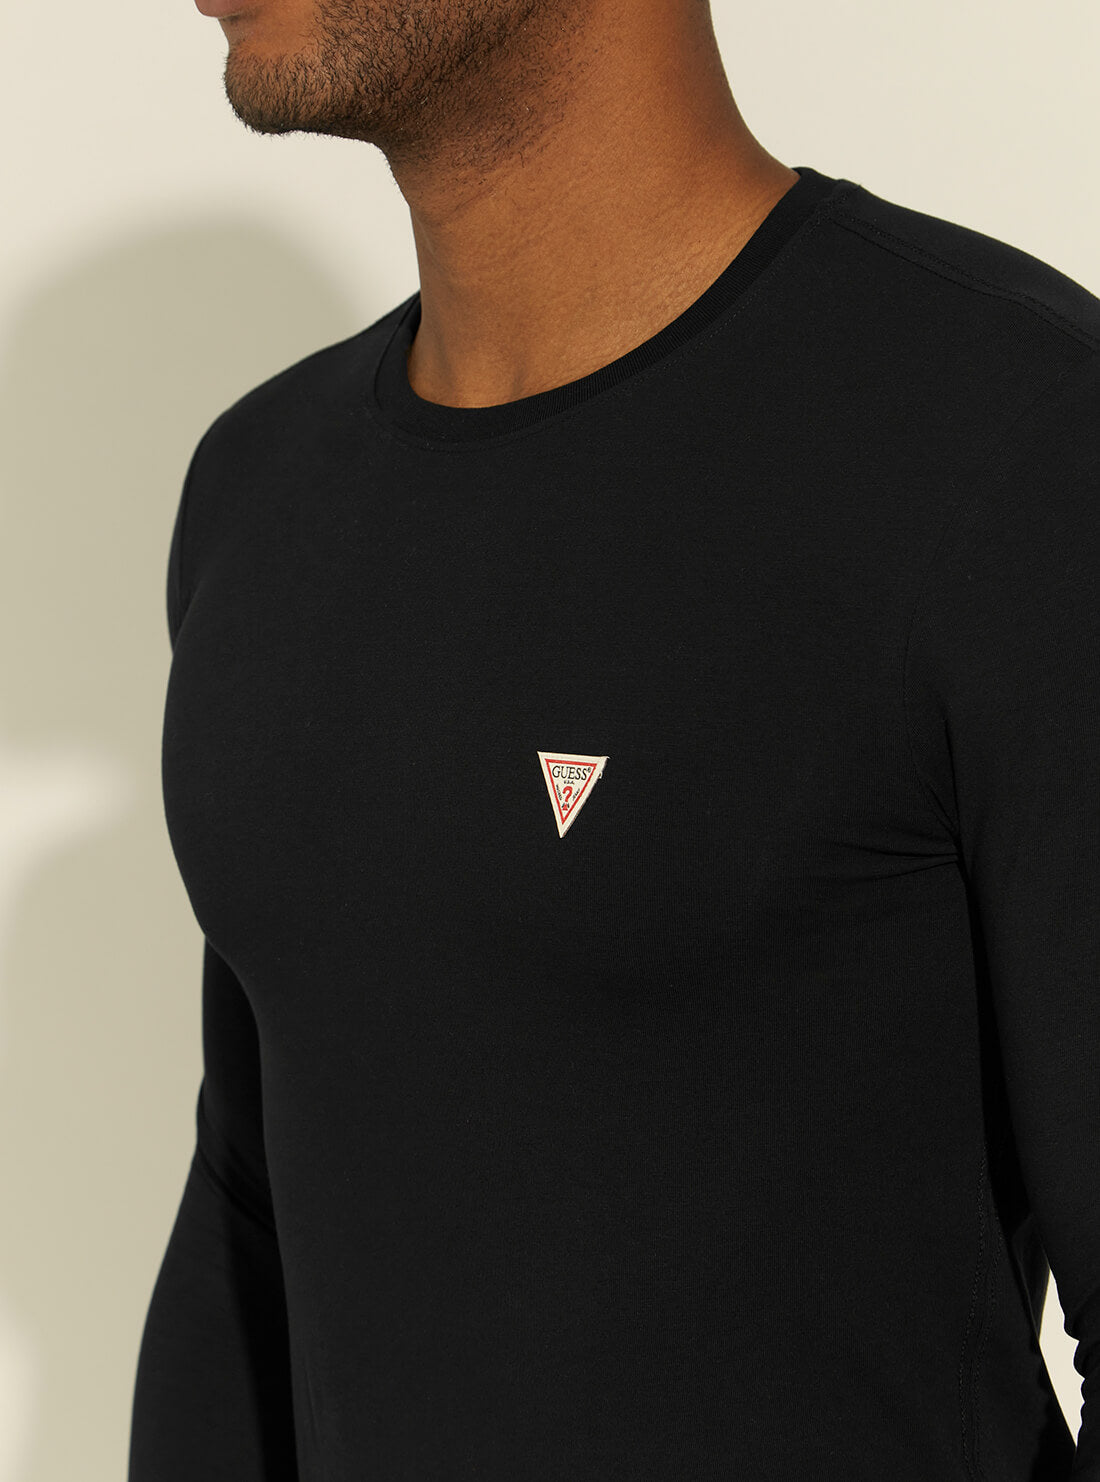 GUESS Mens Black Super Slim Long Sleeve T-Shirt M1RI28J1311 Detail View